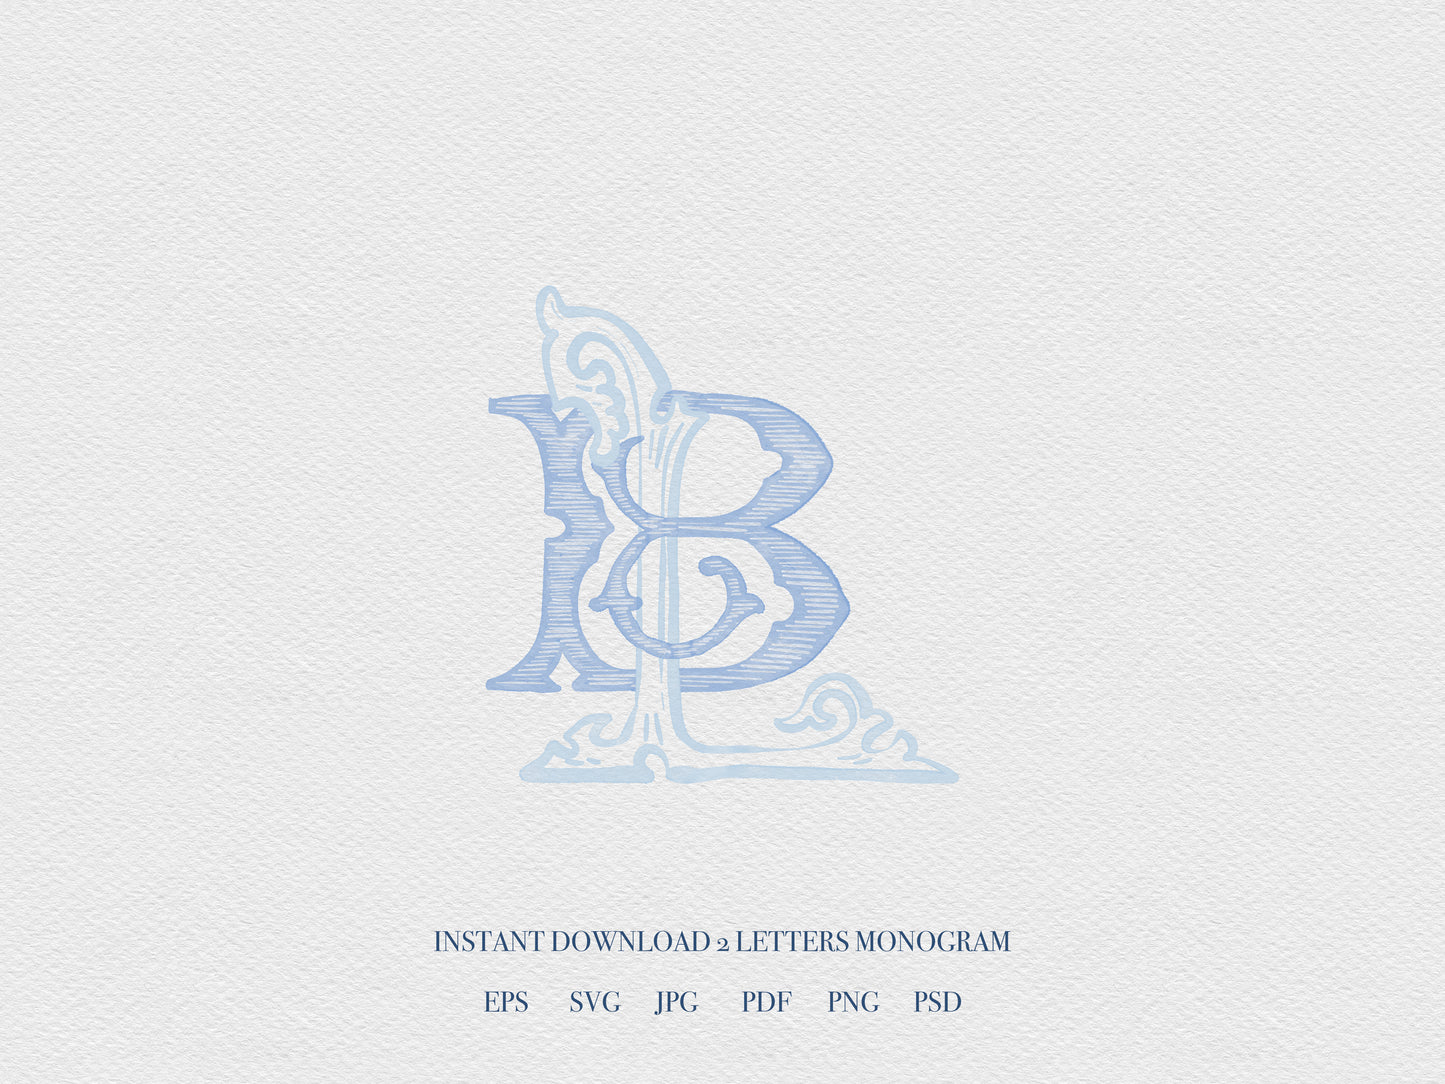 2 Letter Monogram with Letters BL LB | Digital Download - Wedding Monogram SVG, Personal Logo, Wedding Logo for Wedding Invitations The Wedding Crest Lab